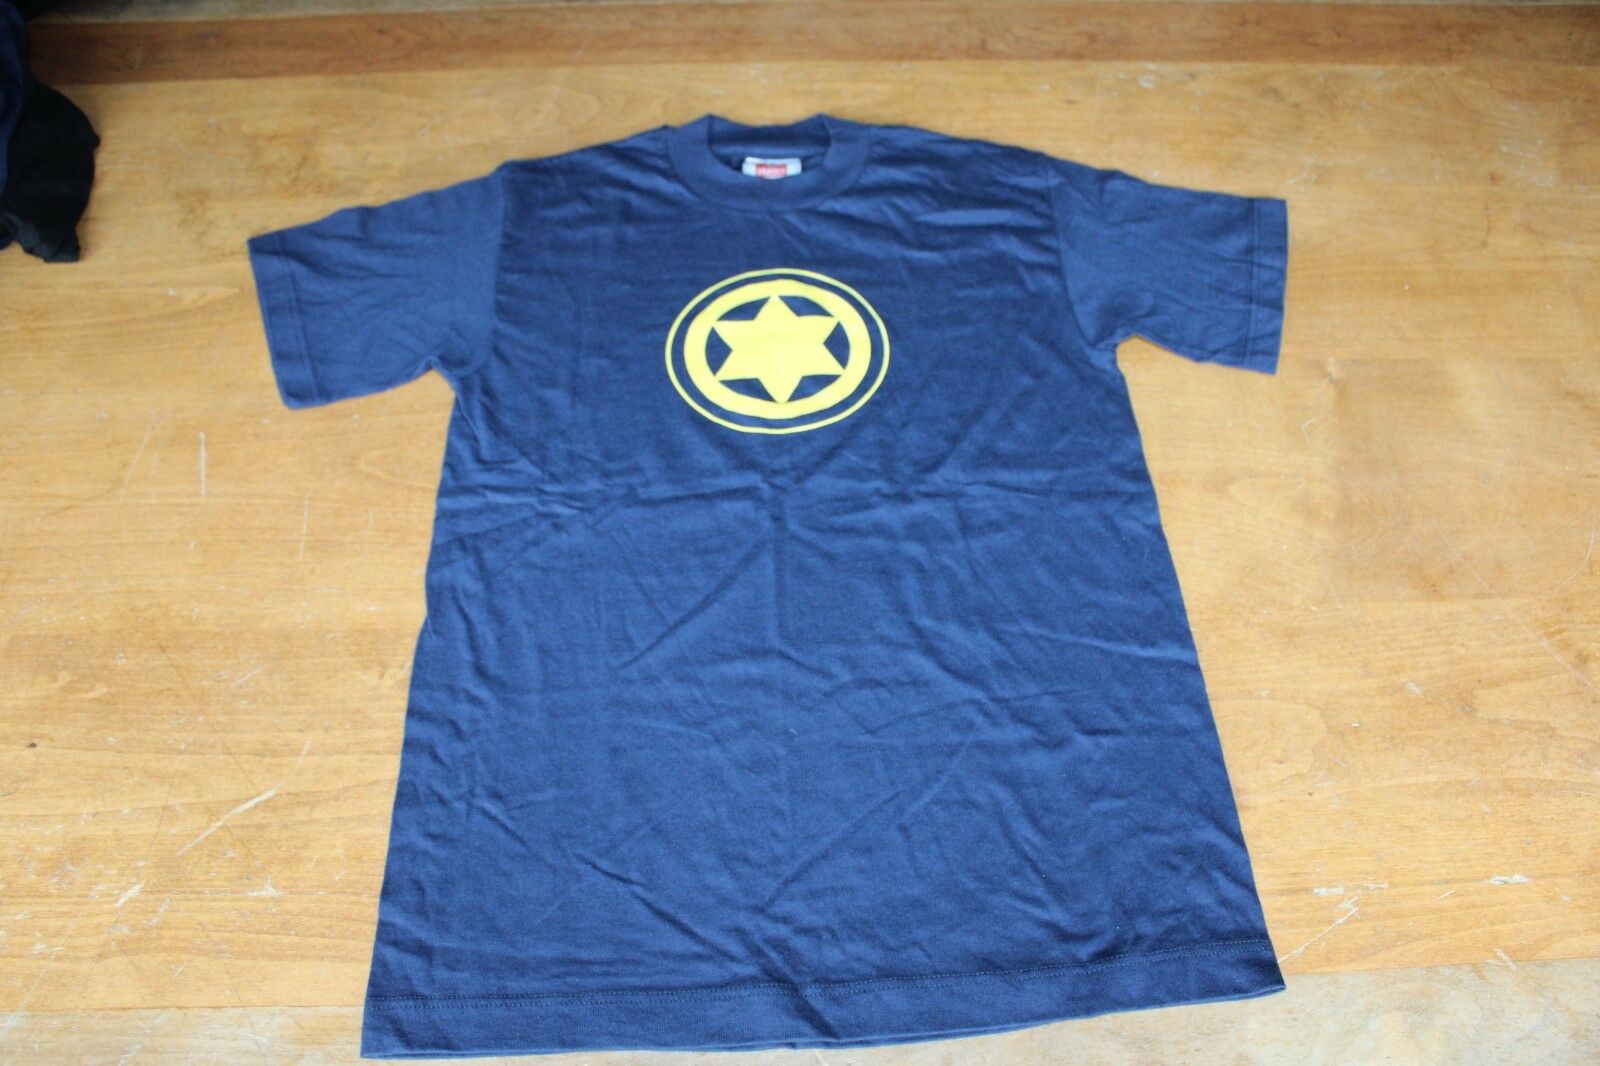 Ben Harper  / Tour T-shirt  /  Uk Tour 1998  - Size S - New